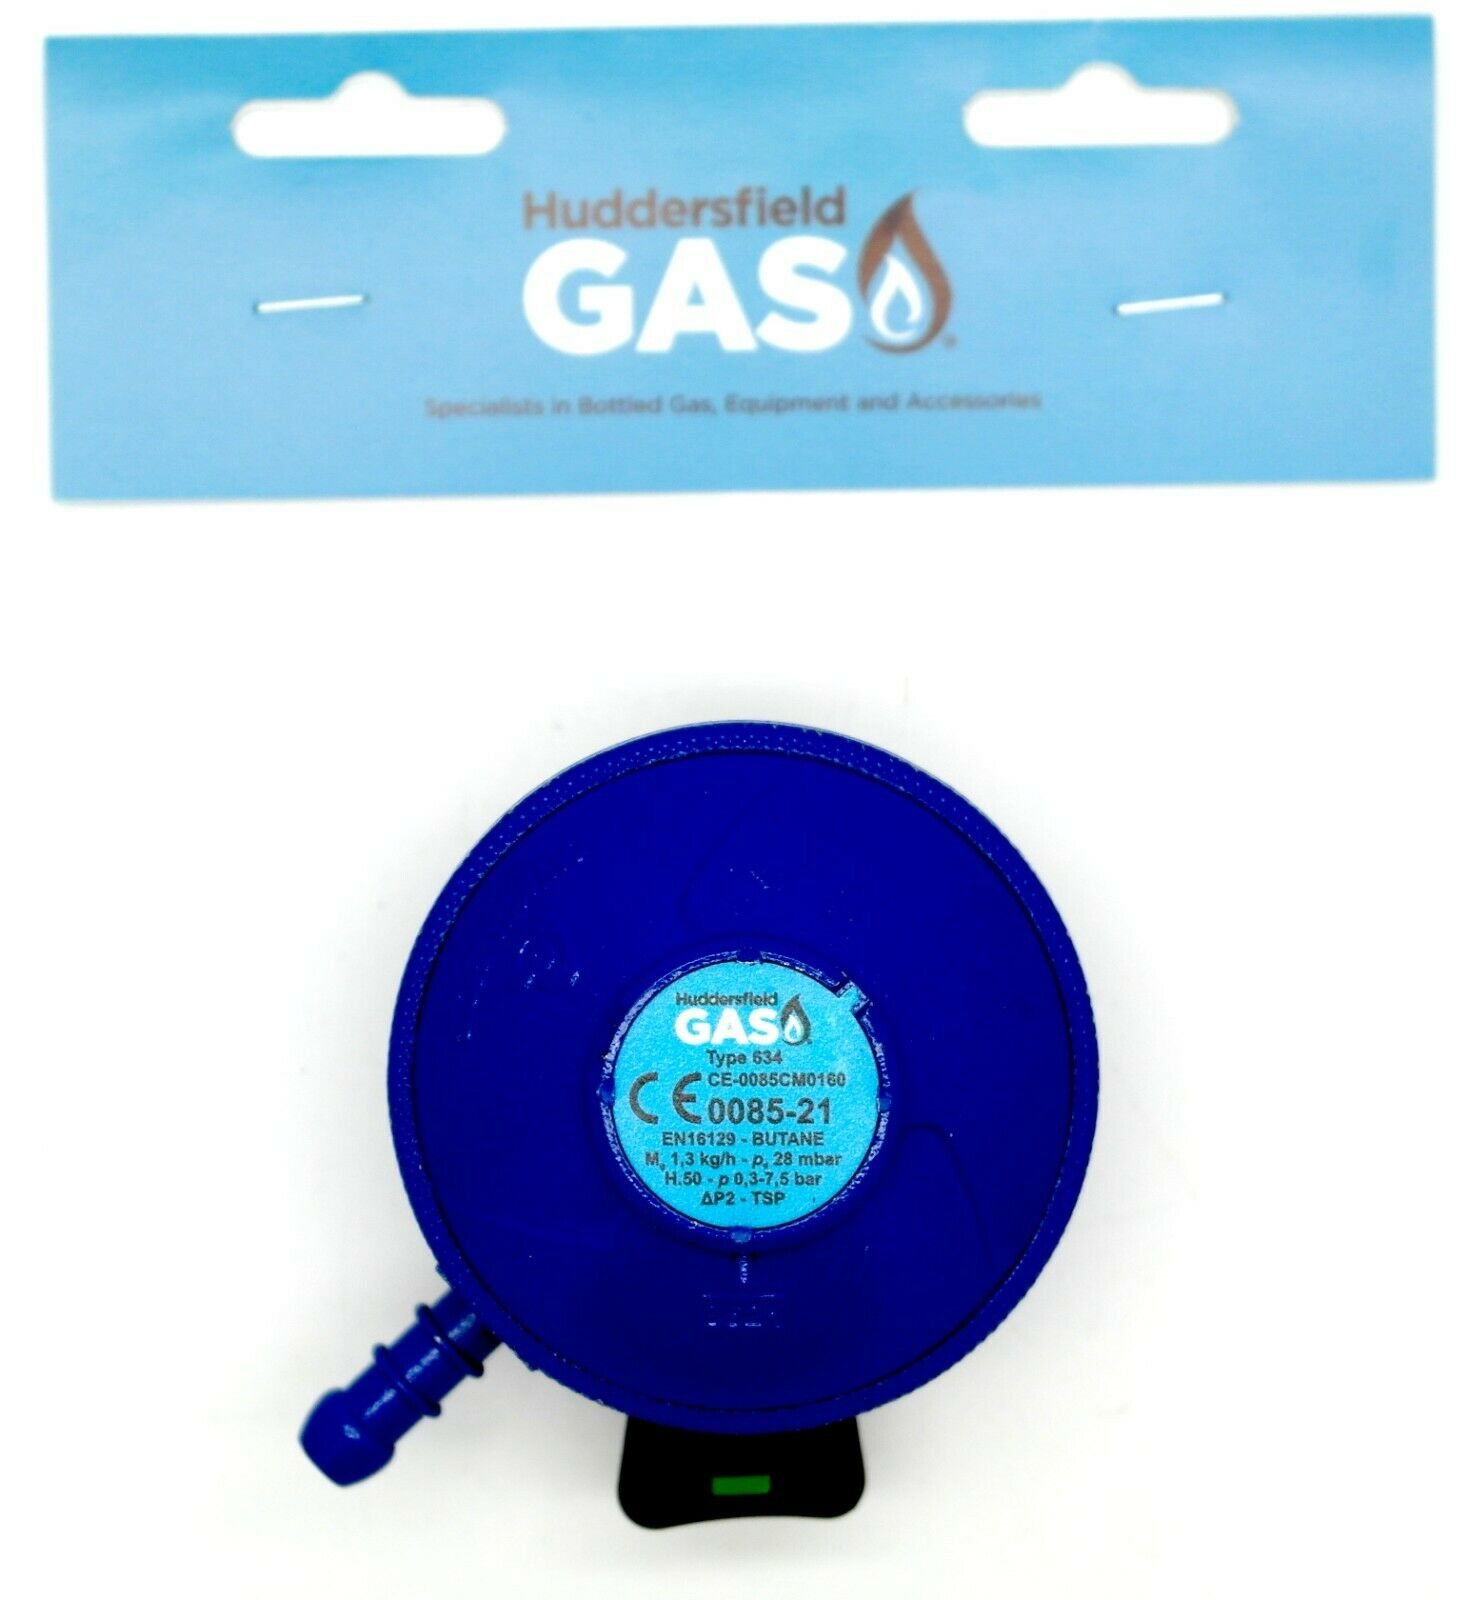 Huddersfield gas 28 mbar regulador de gas butano para cilindros de 21mm